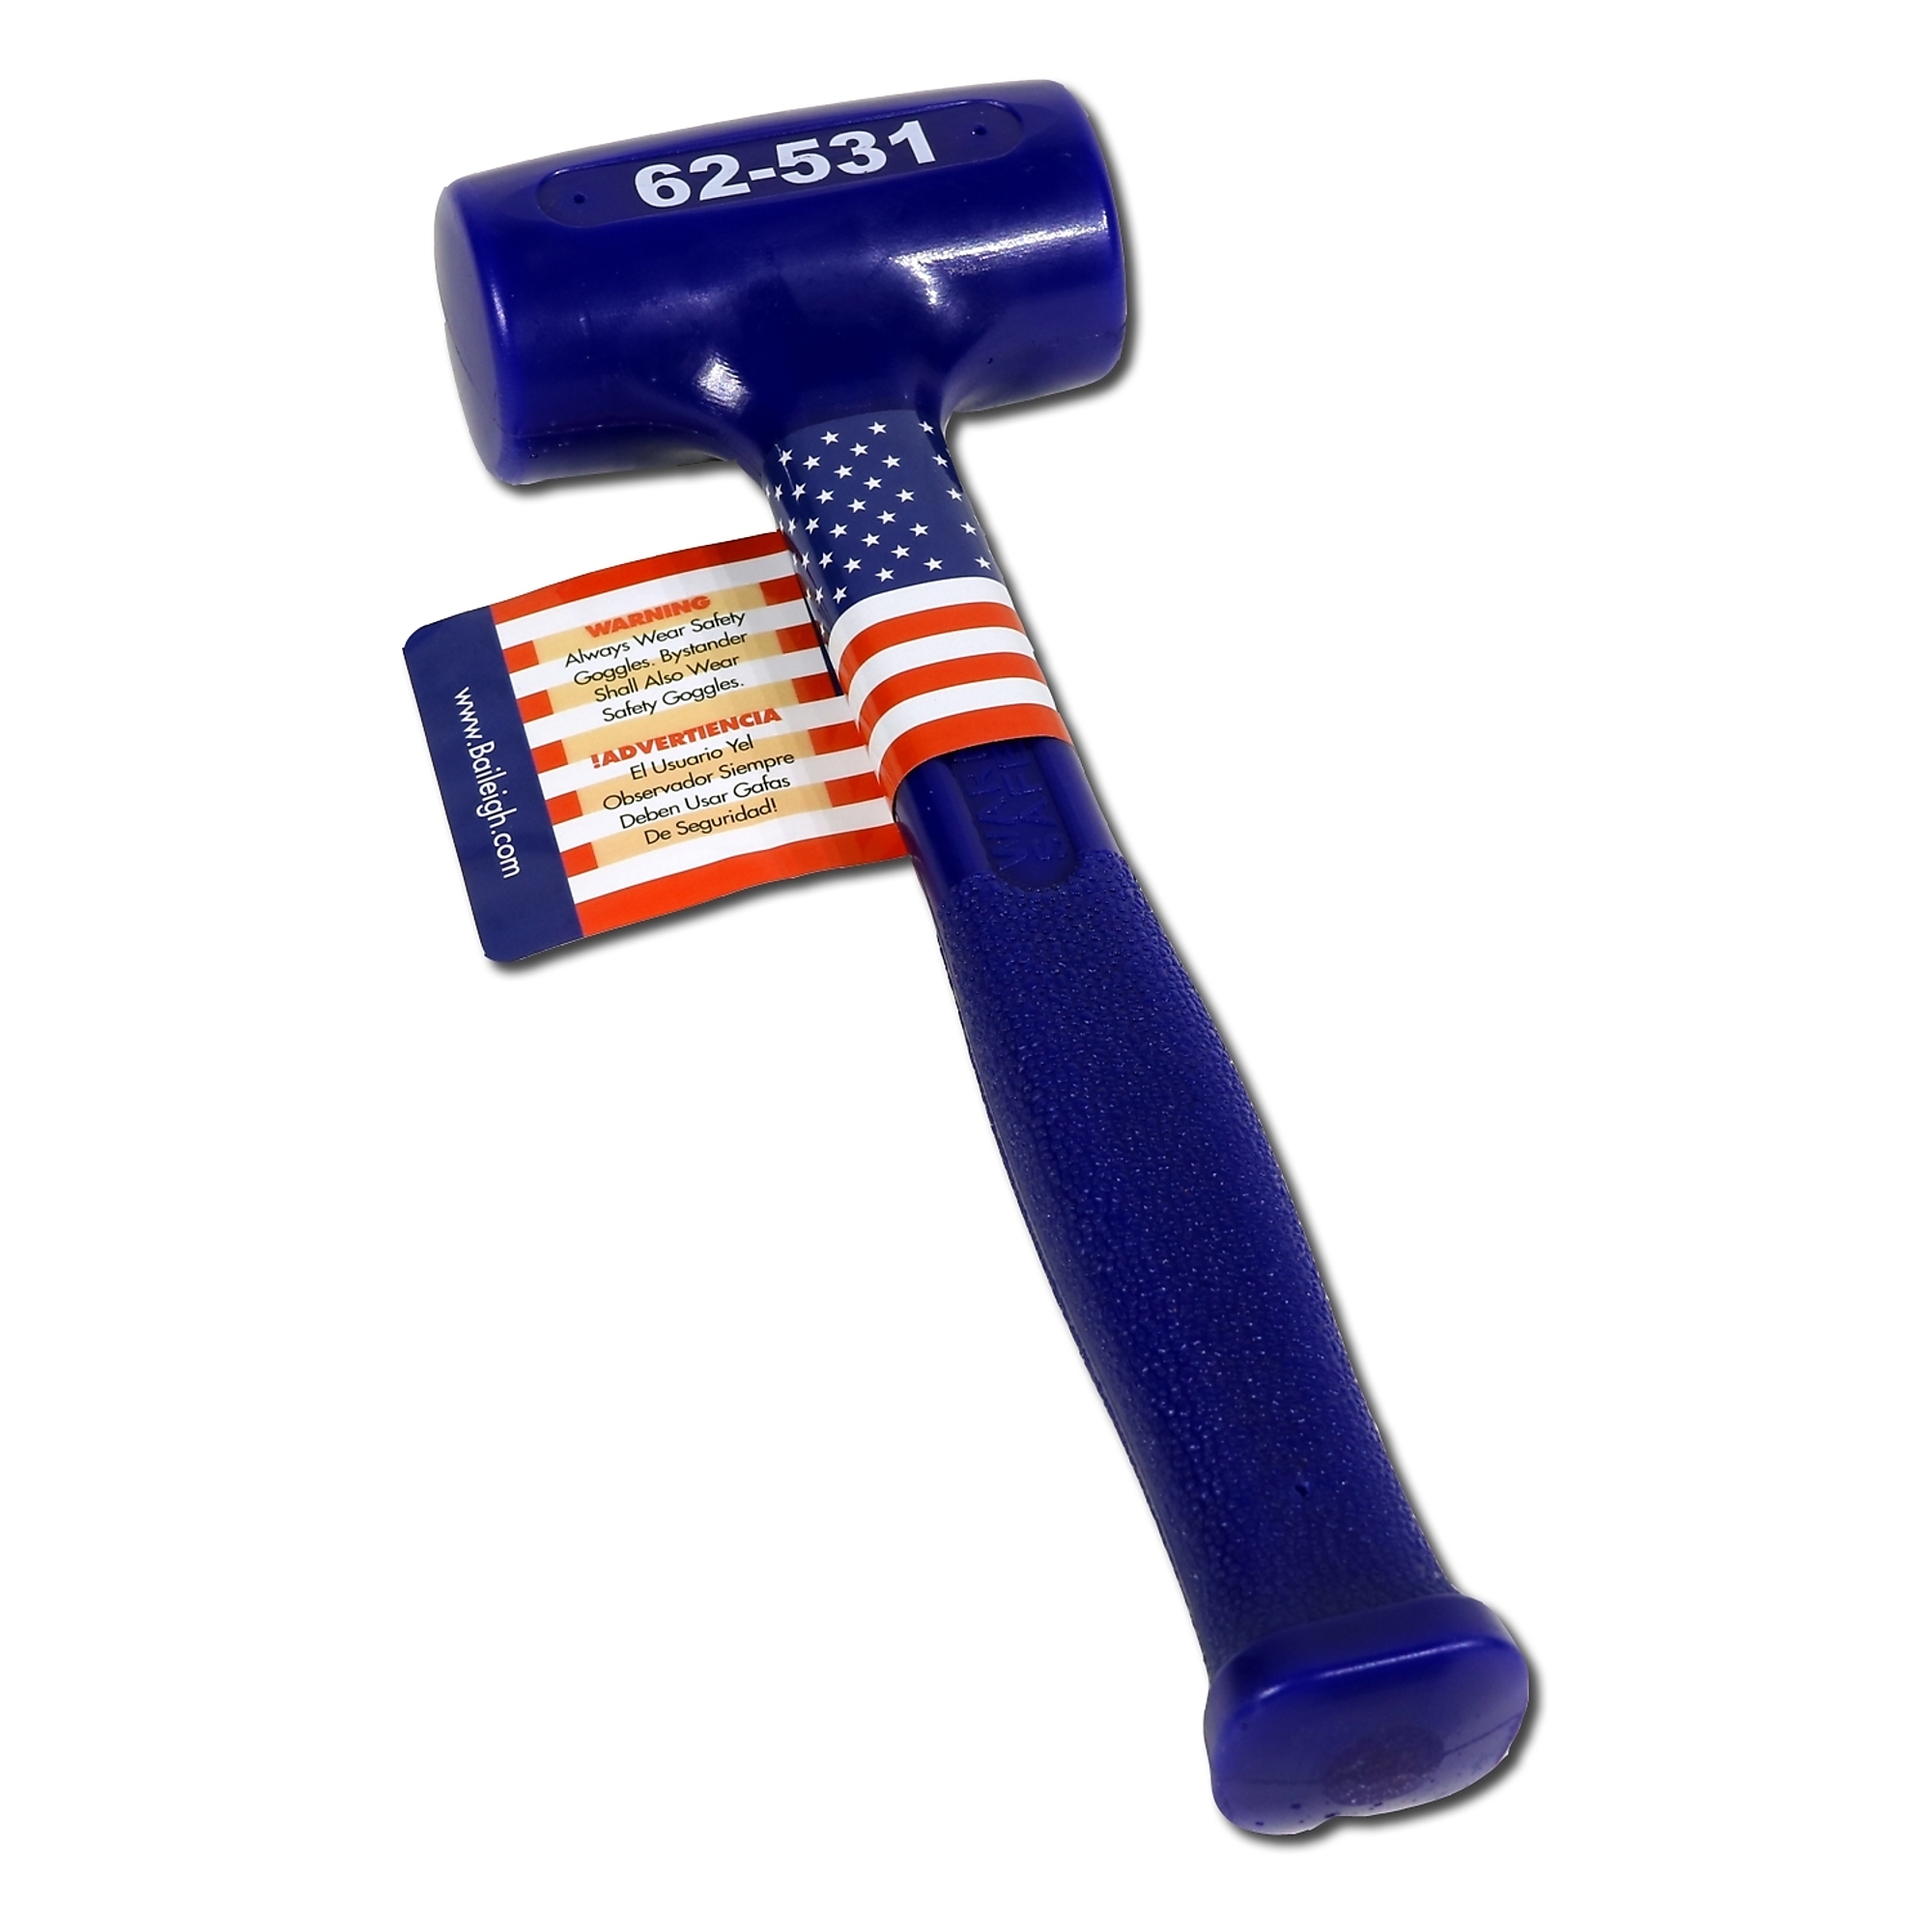 Baileigh, Softface Hammer, Handle Length 12.75 in, Model 1018002